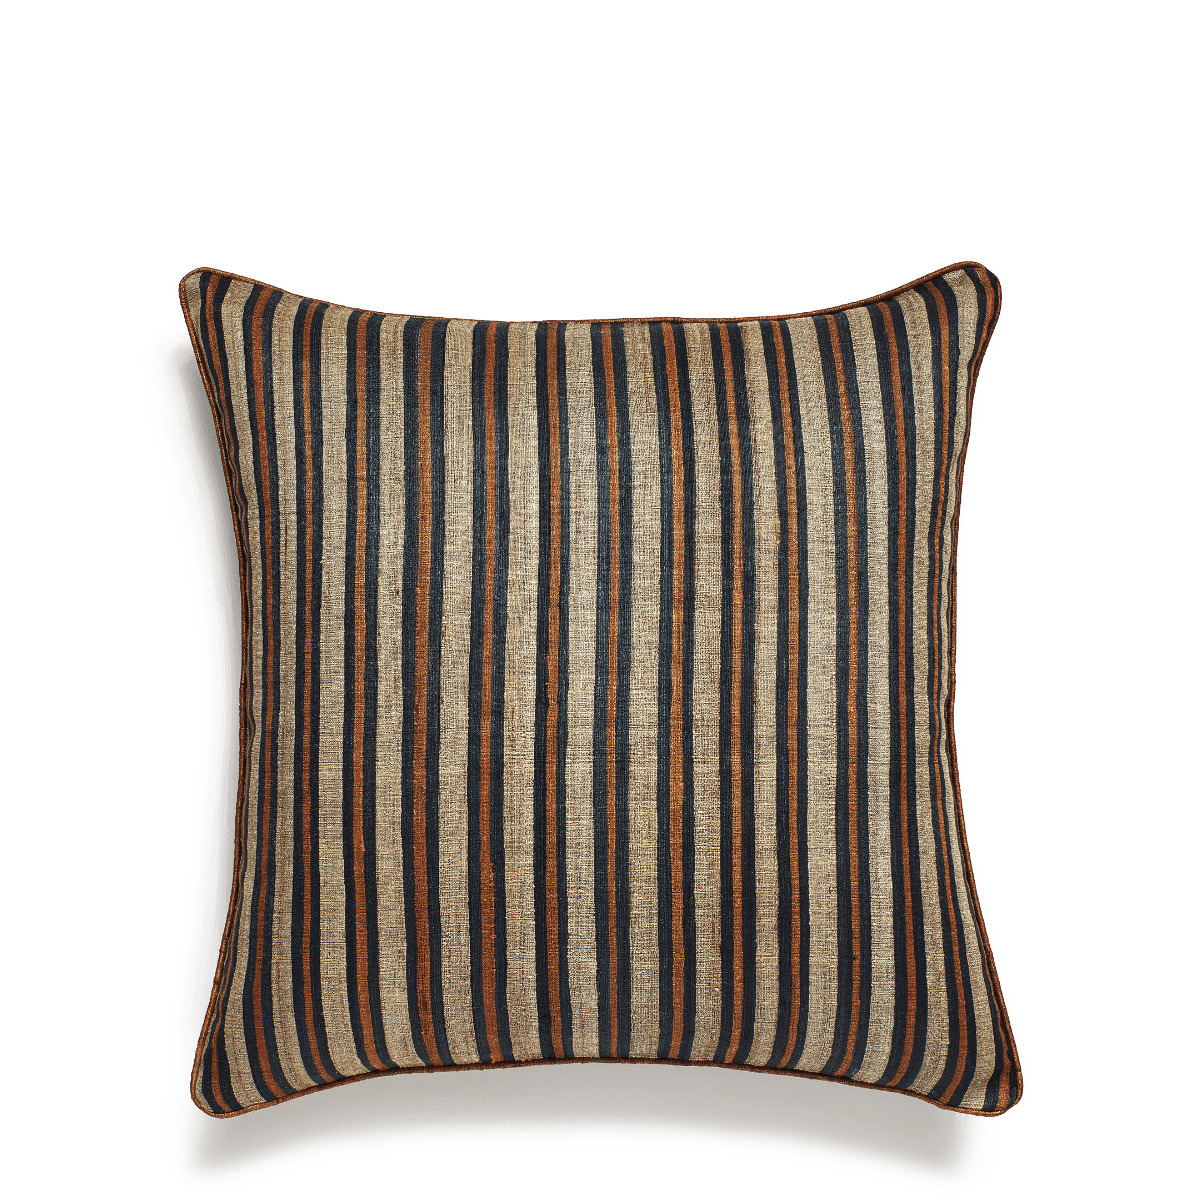 OKA, Artemisia Cushion Cover - Gold/Teal, Cushion Covers, Silk, Striped